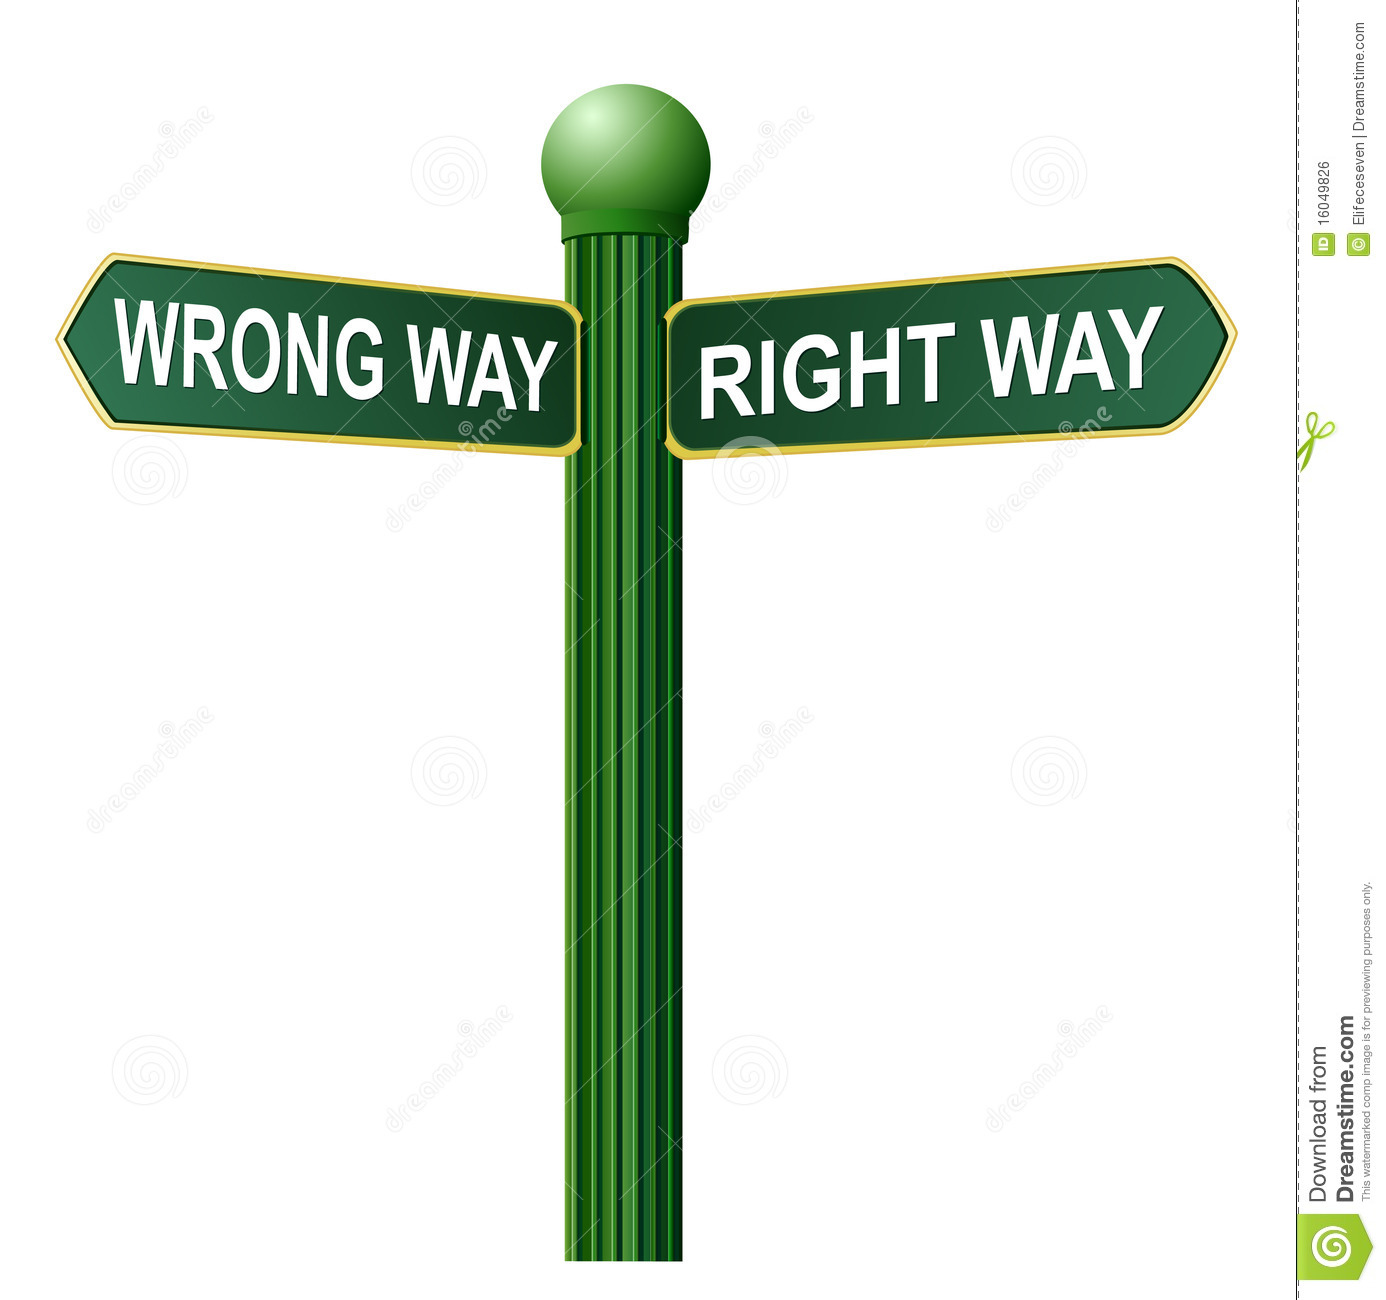 Wrong Way Right Way Street Sign Royalty Free Stock Image Image